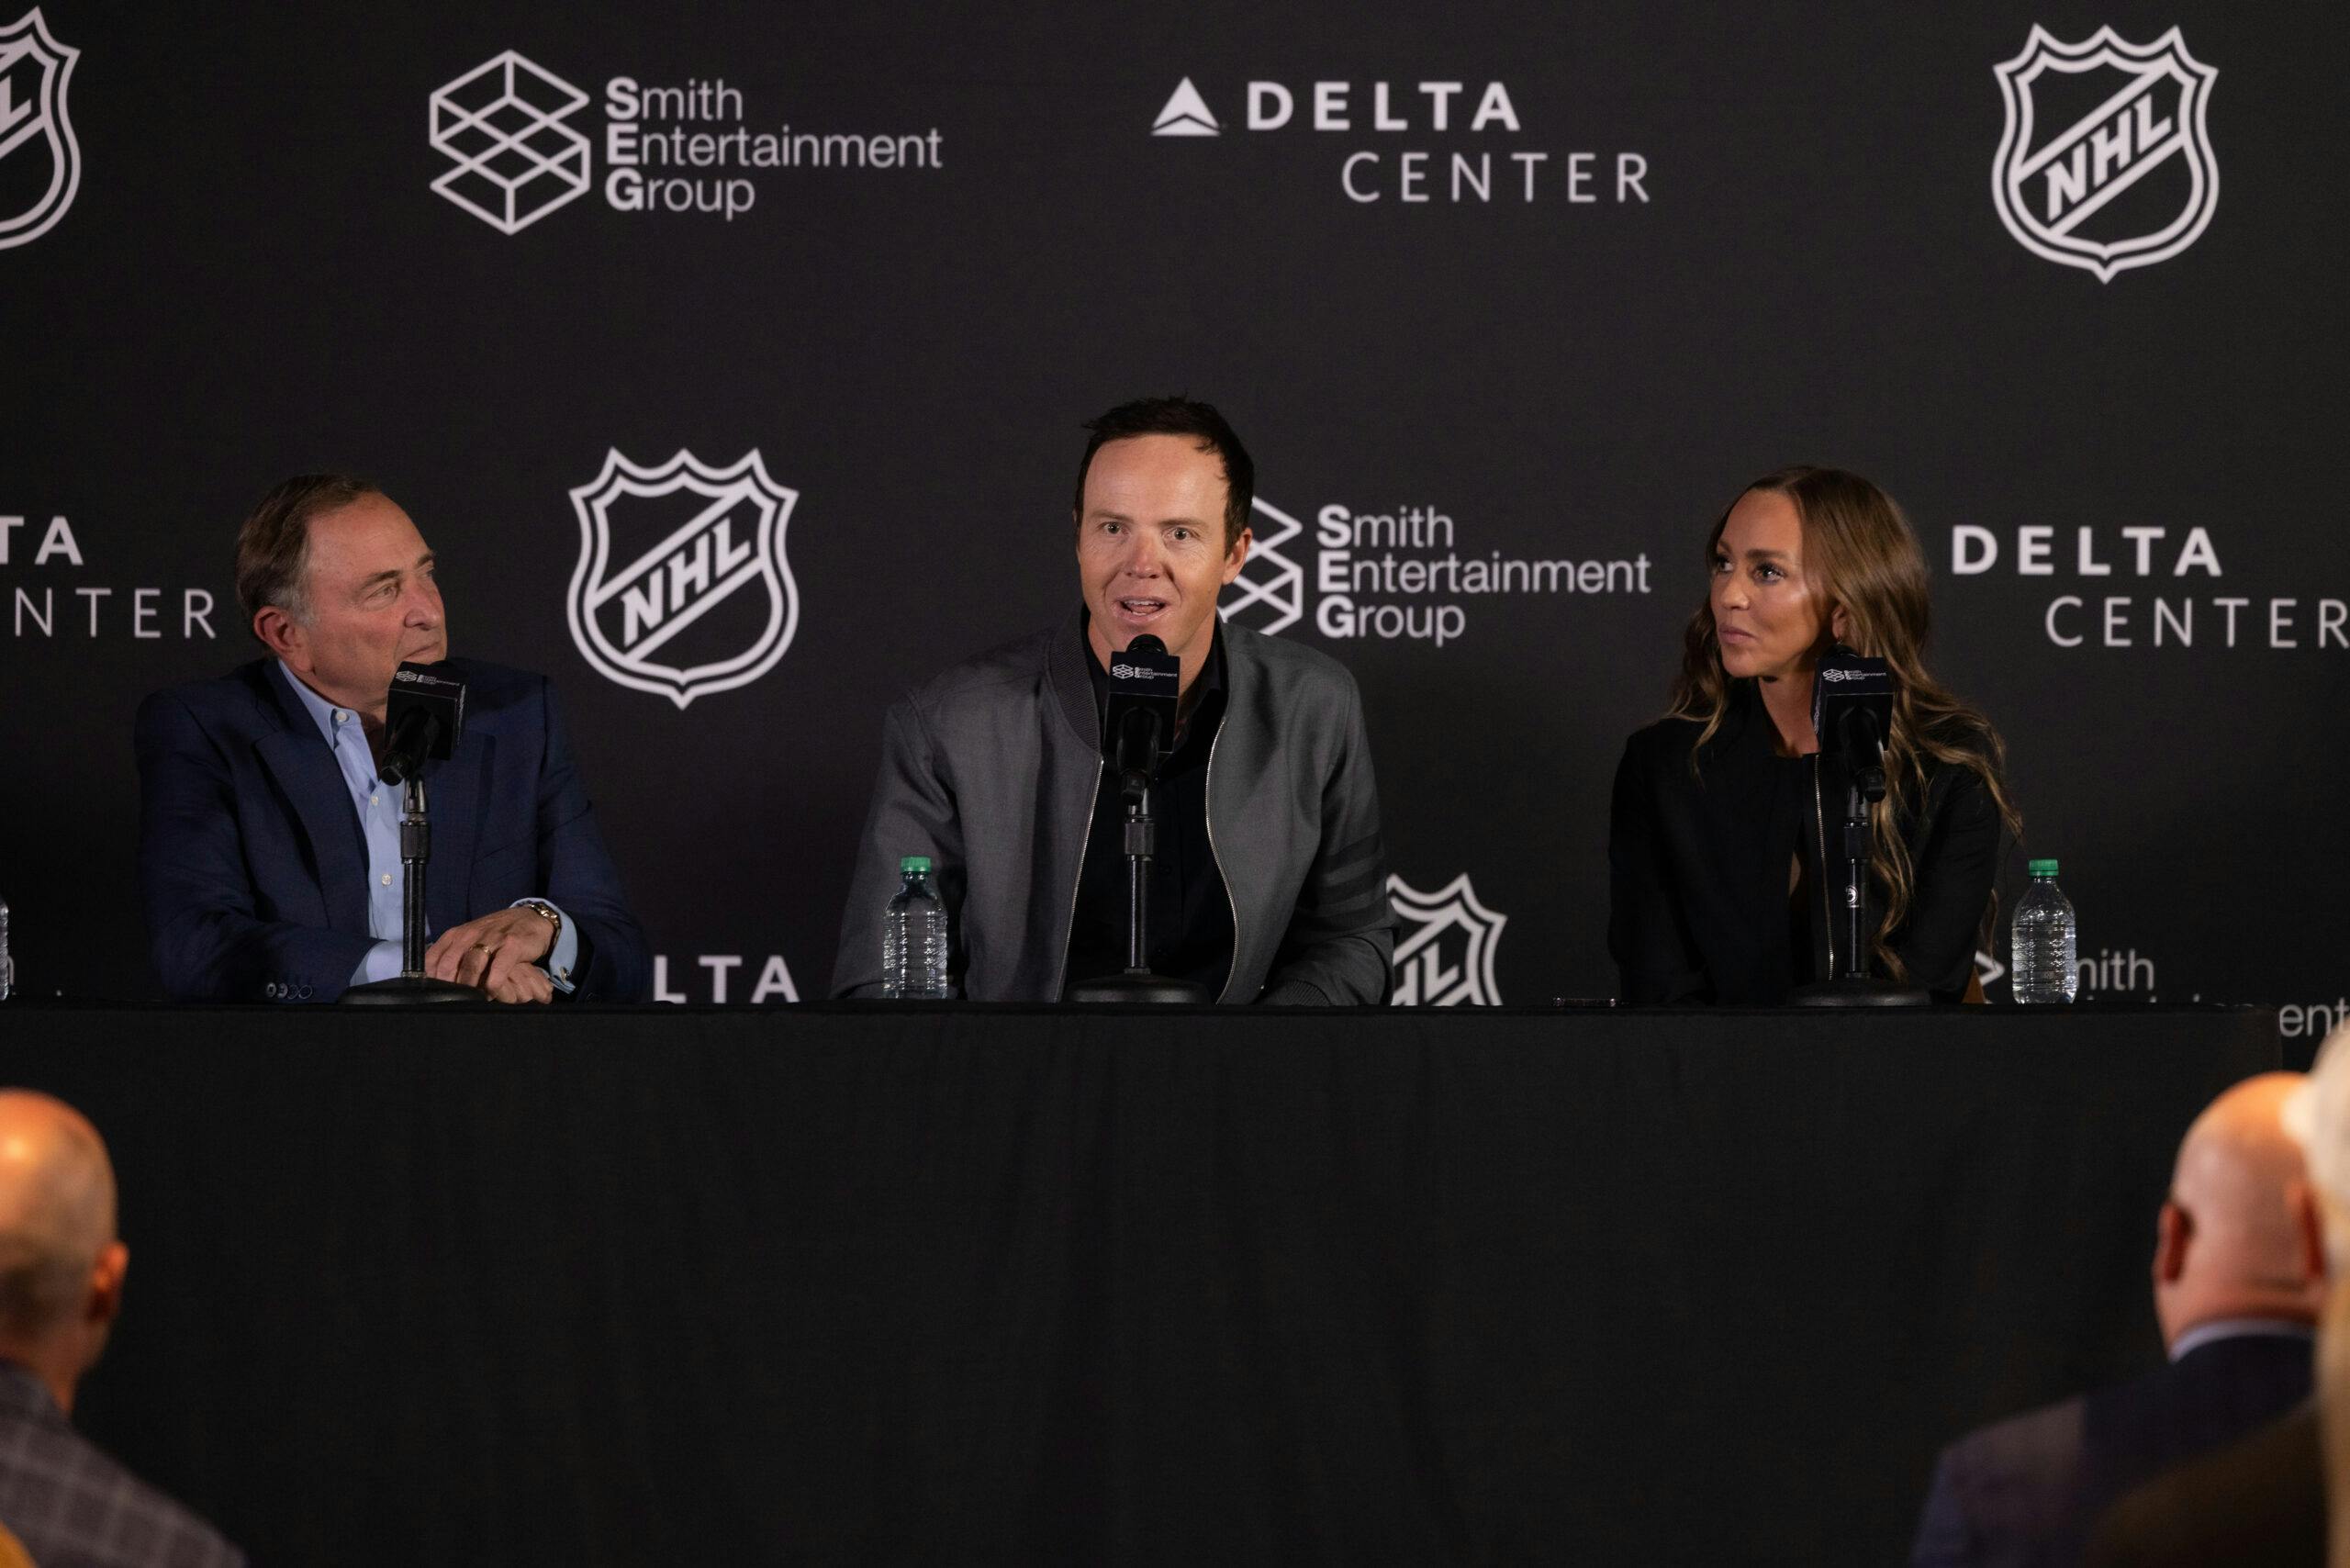 SEG reveals survey to name new Utah NHL team